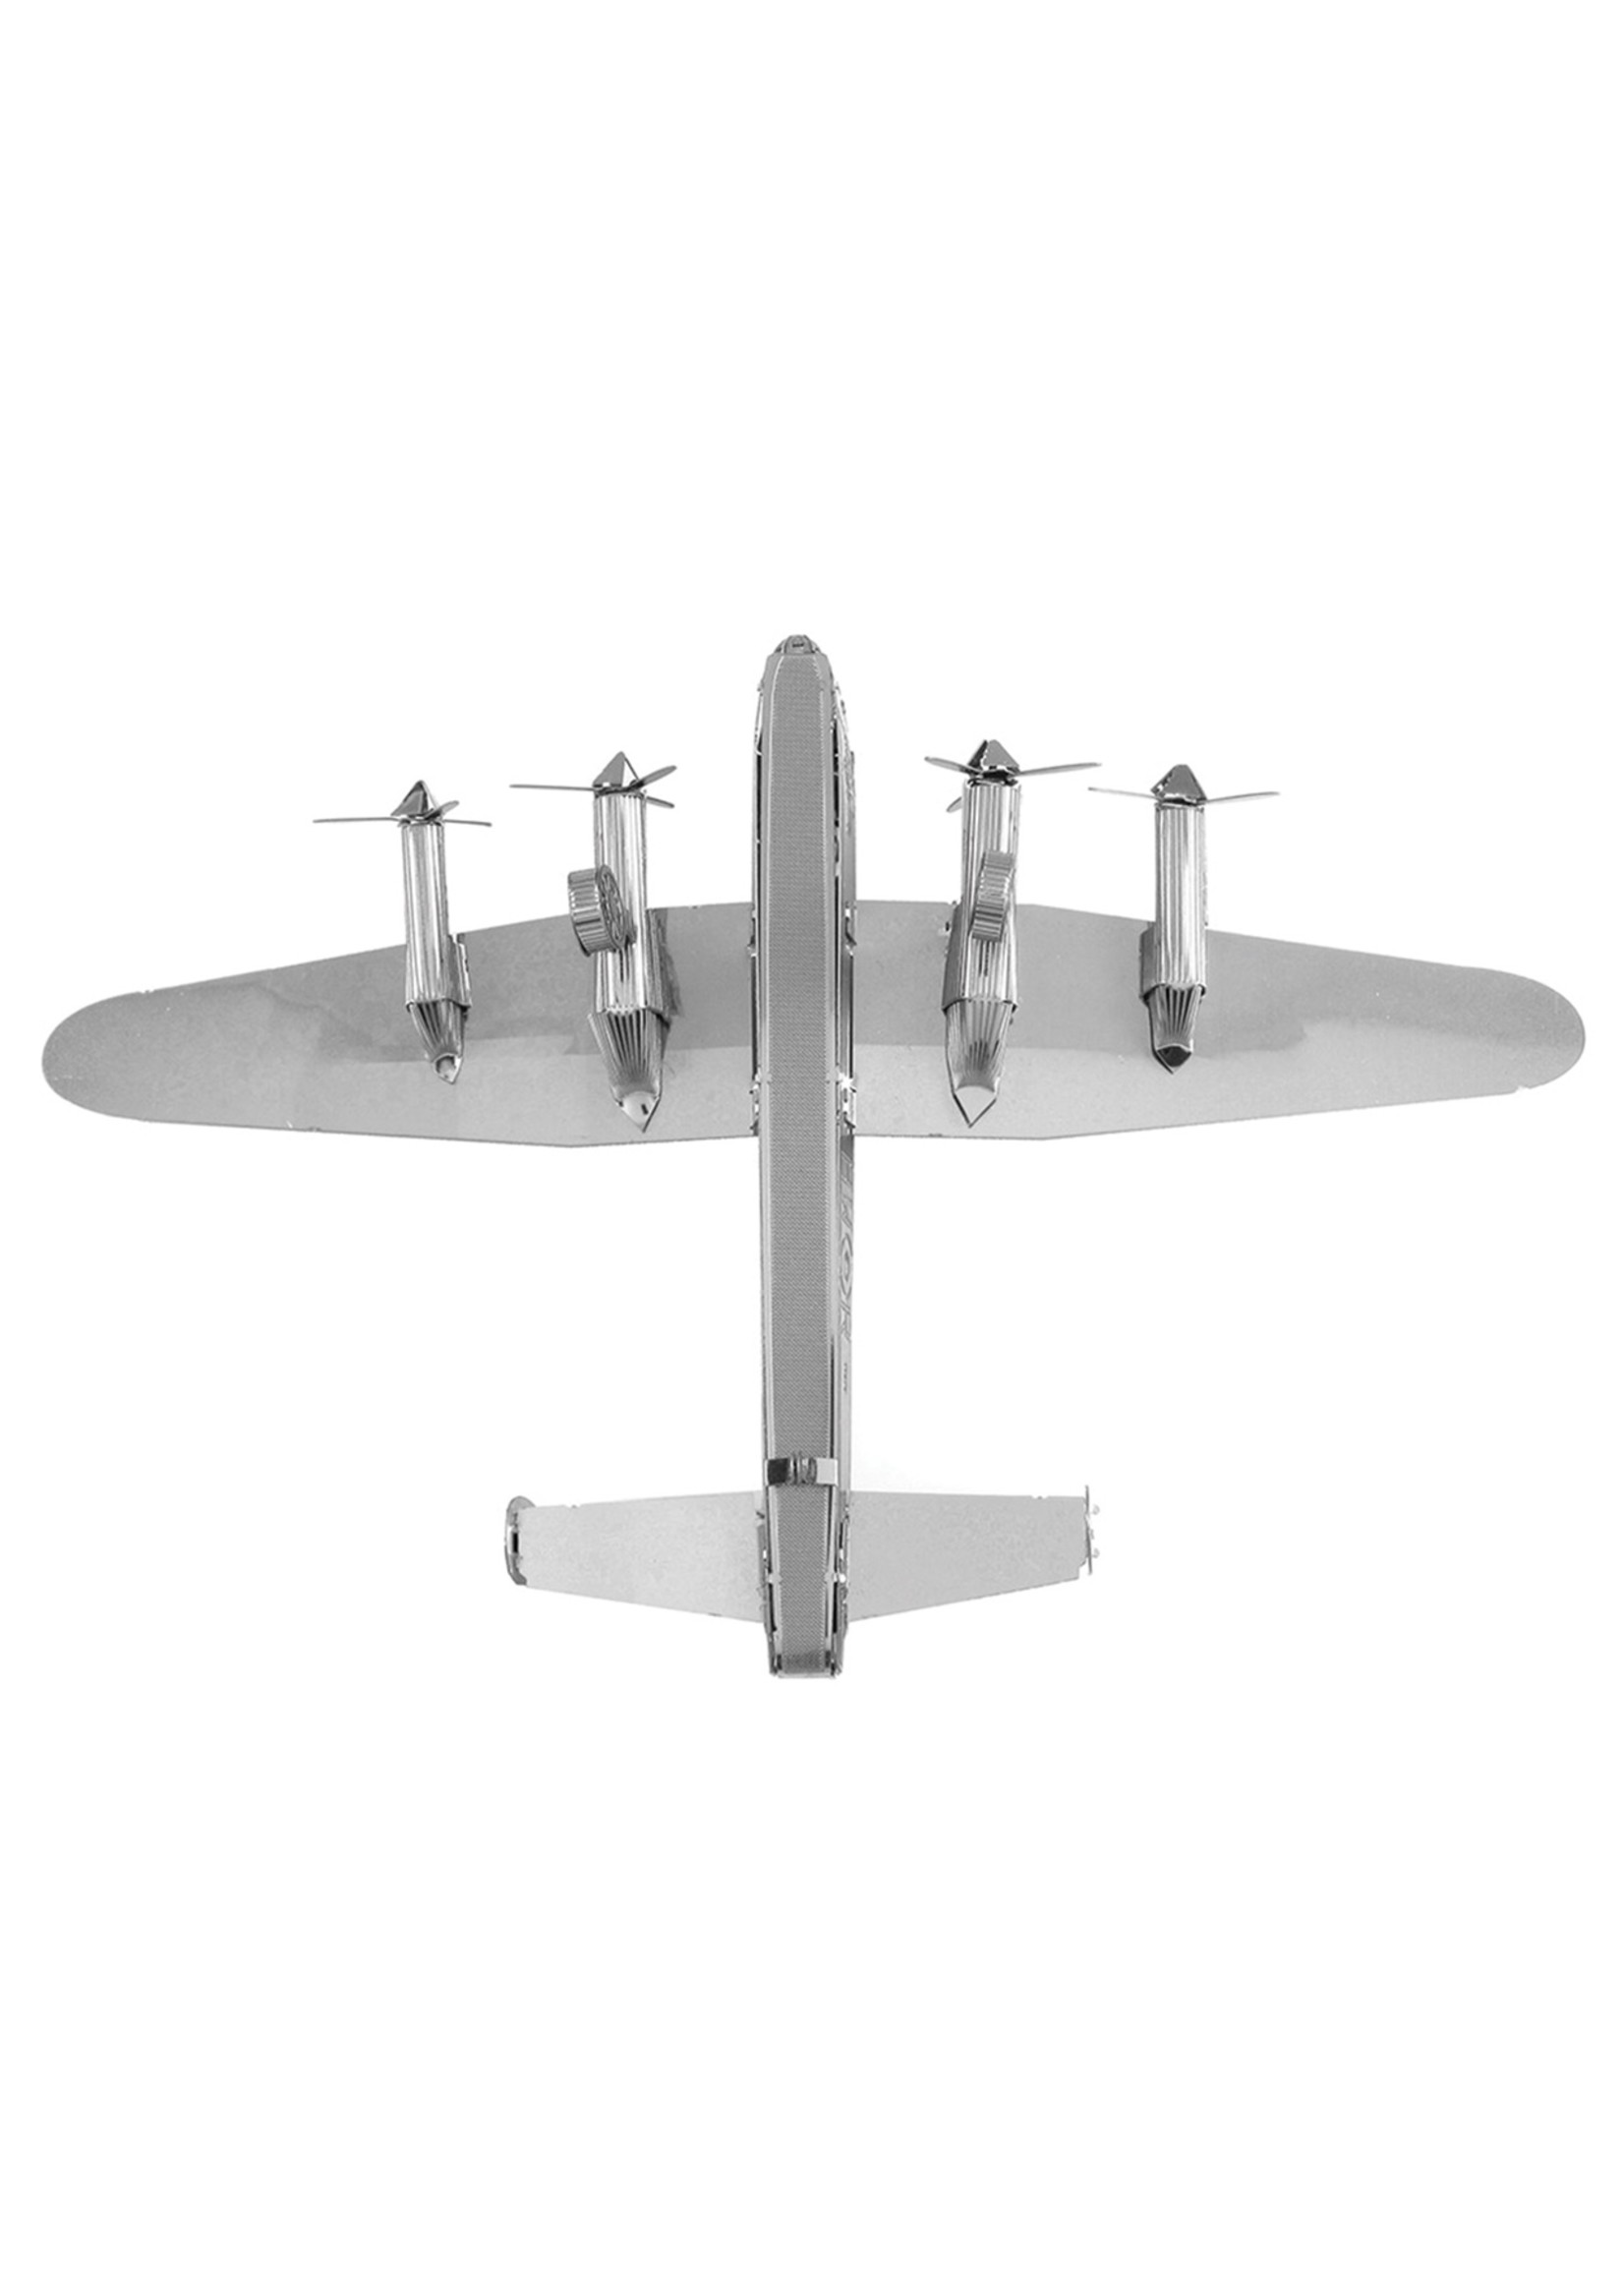 Fascinations Metal Earth - Lancaster Bomber Plane